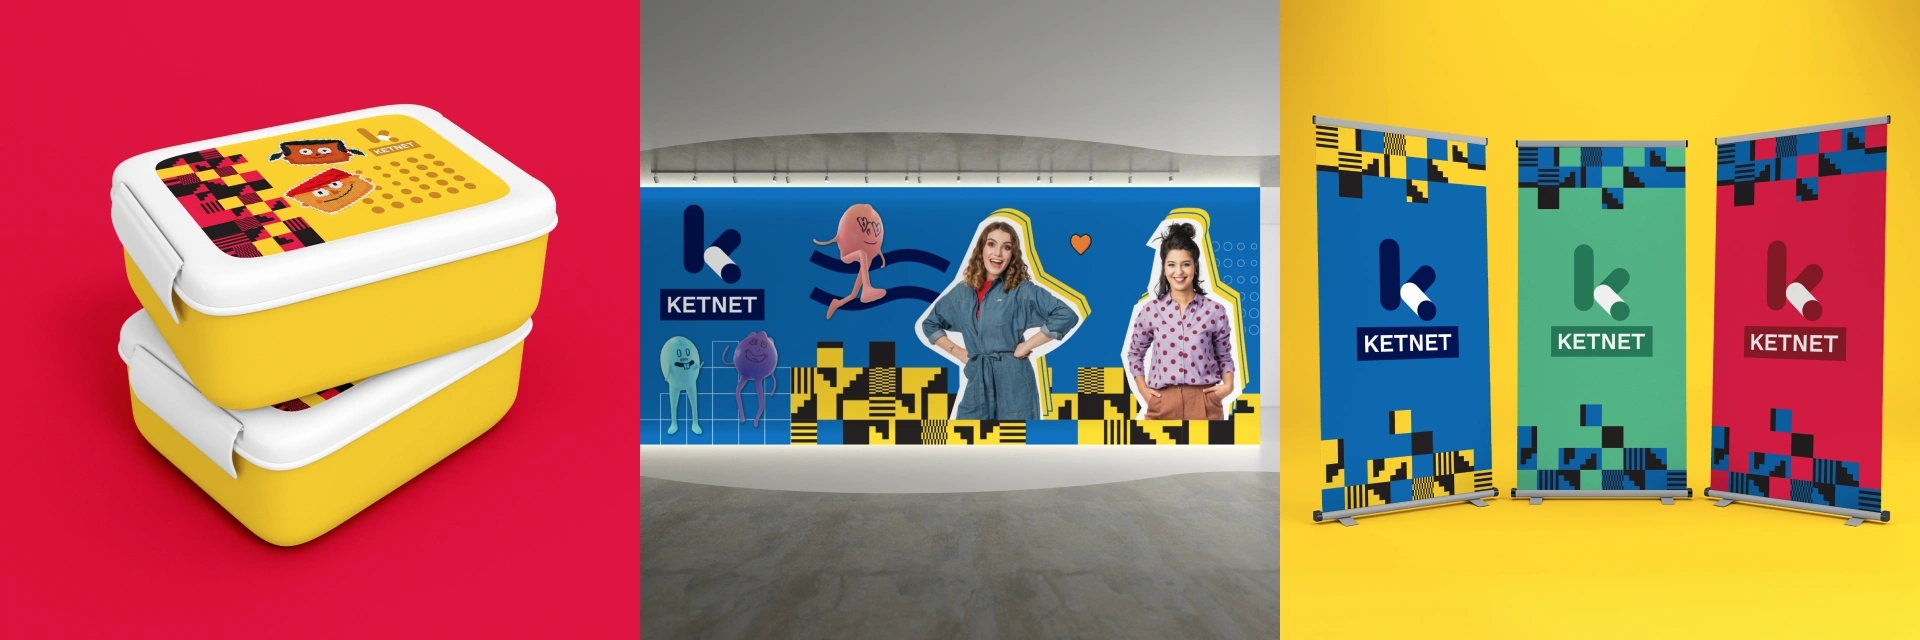 branding-ketnet-project4.webp